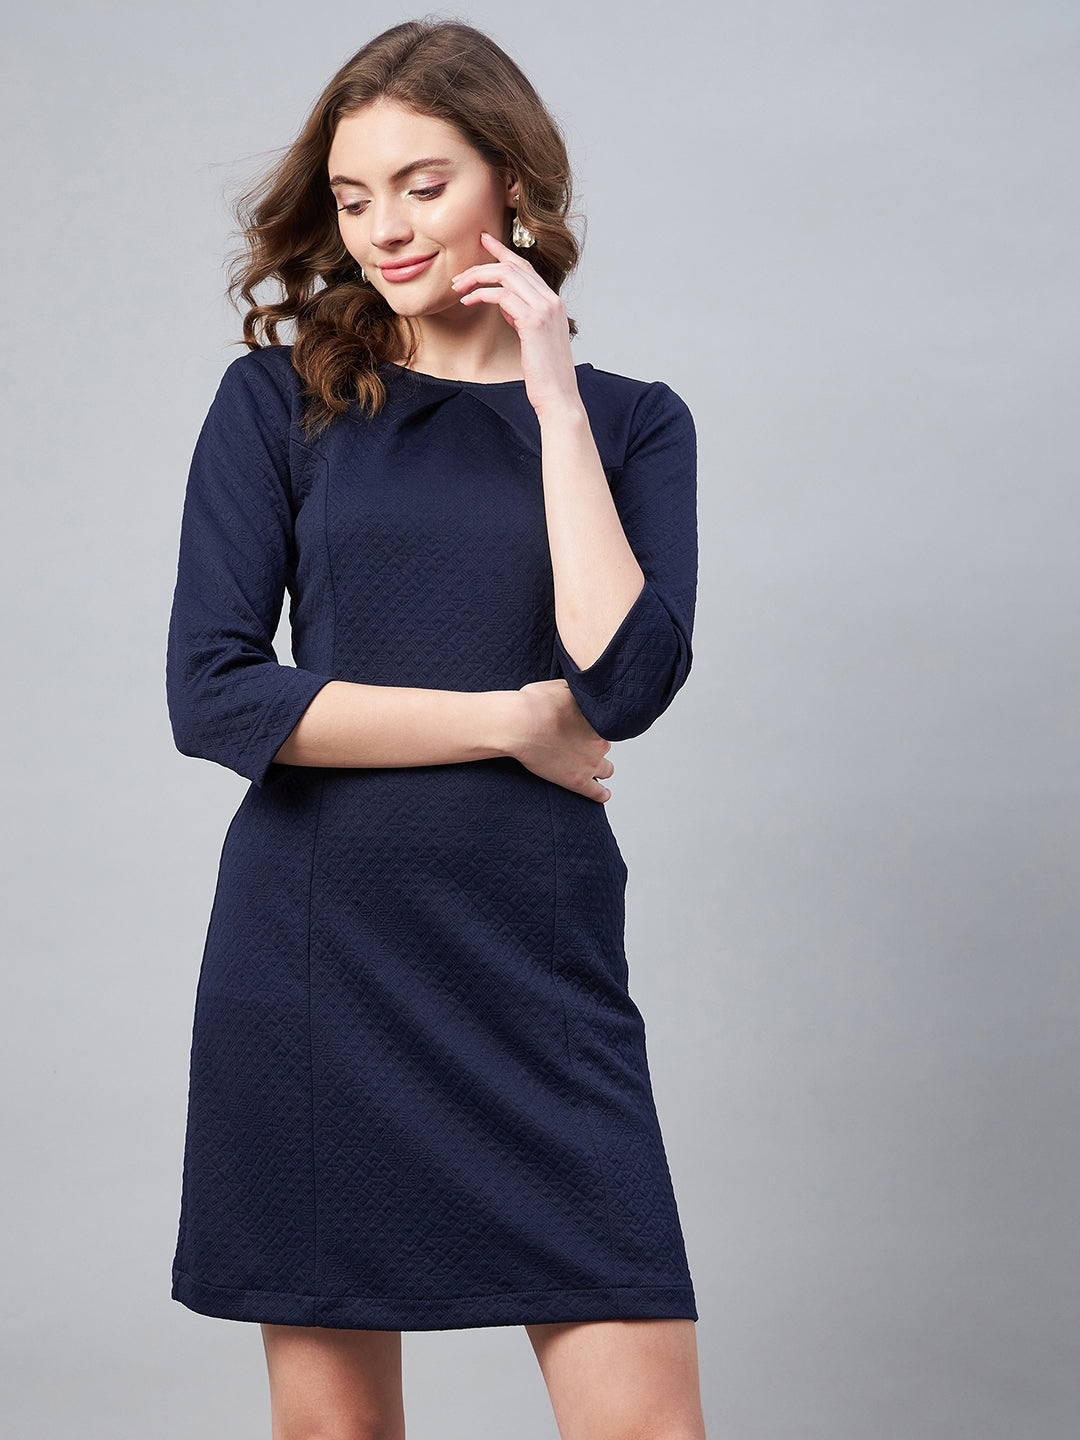 StyleStone Women's Jacquard Self Design Navy Dress